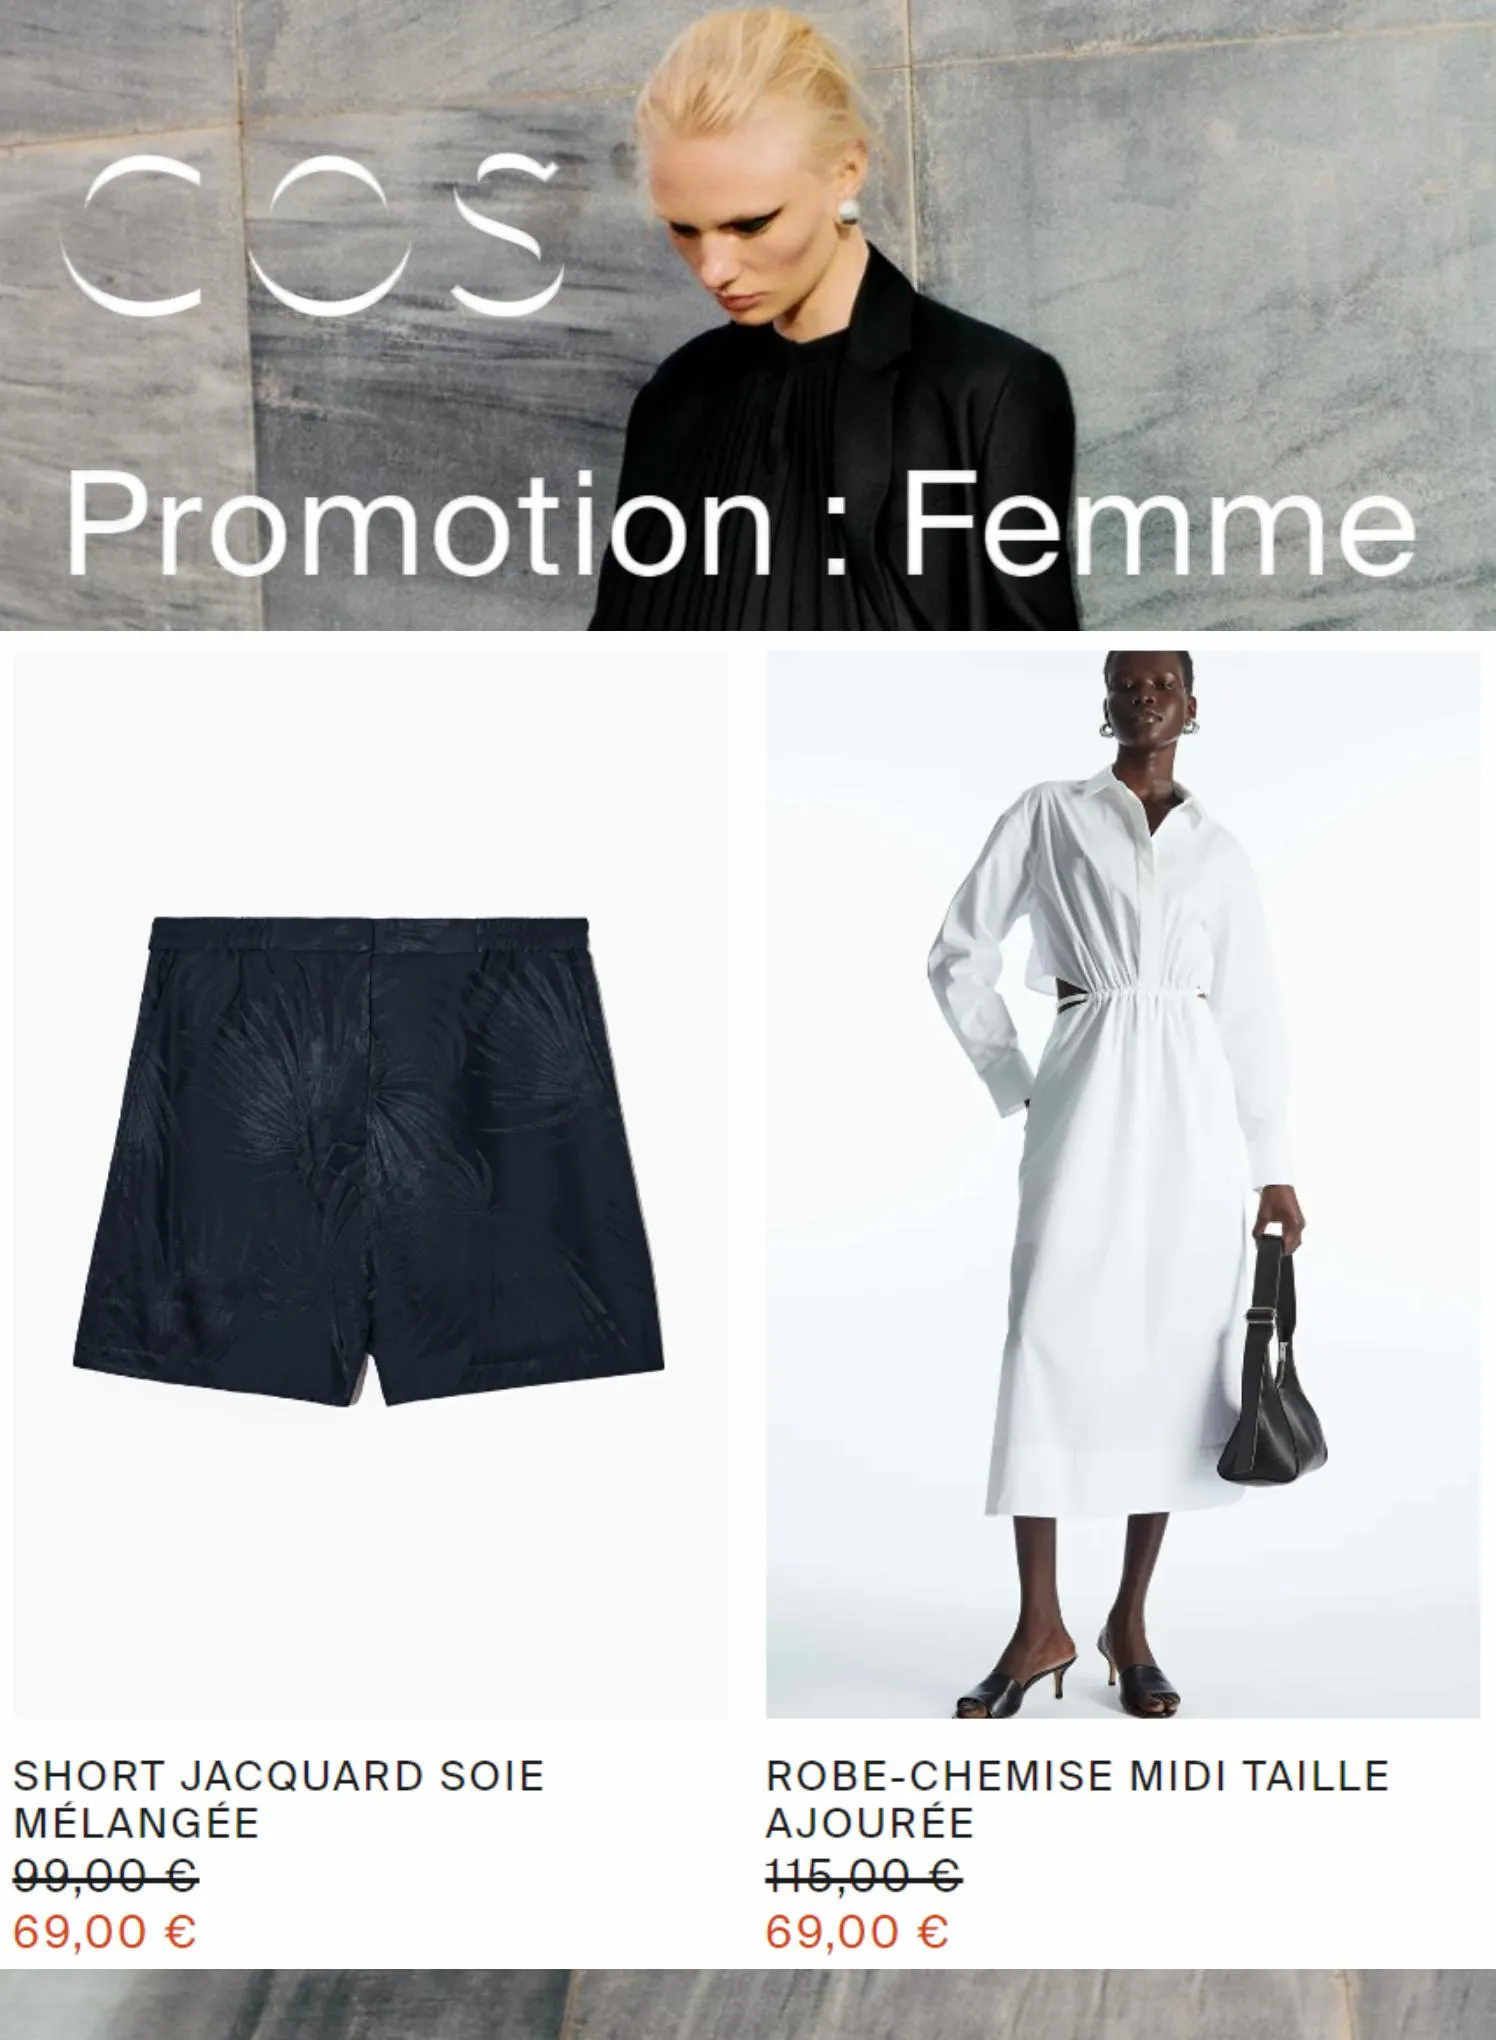 Catalogue Promotion: Femme, page 00004